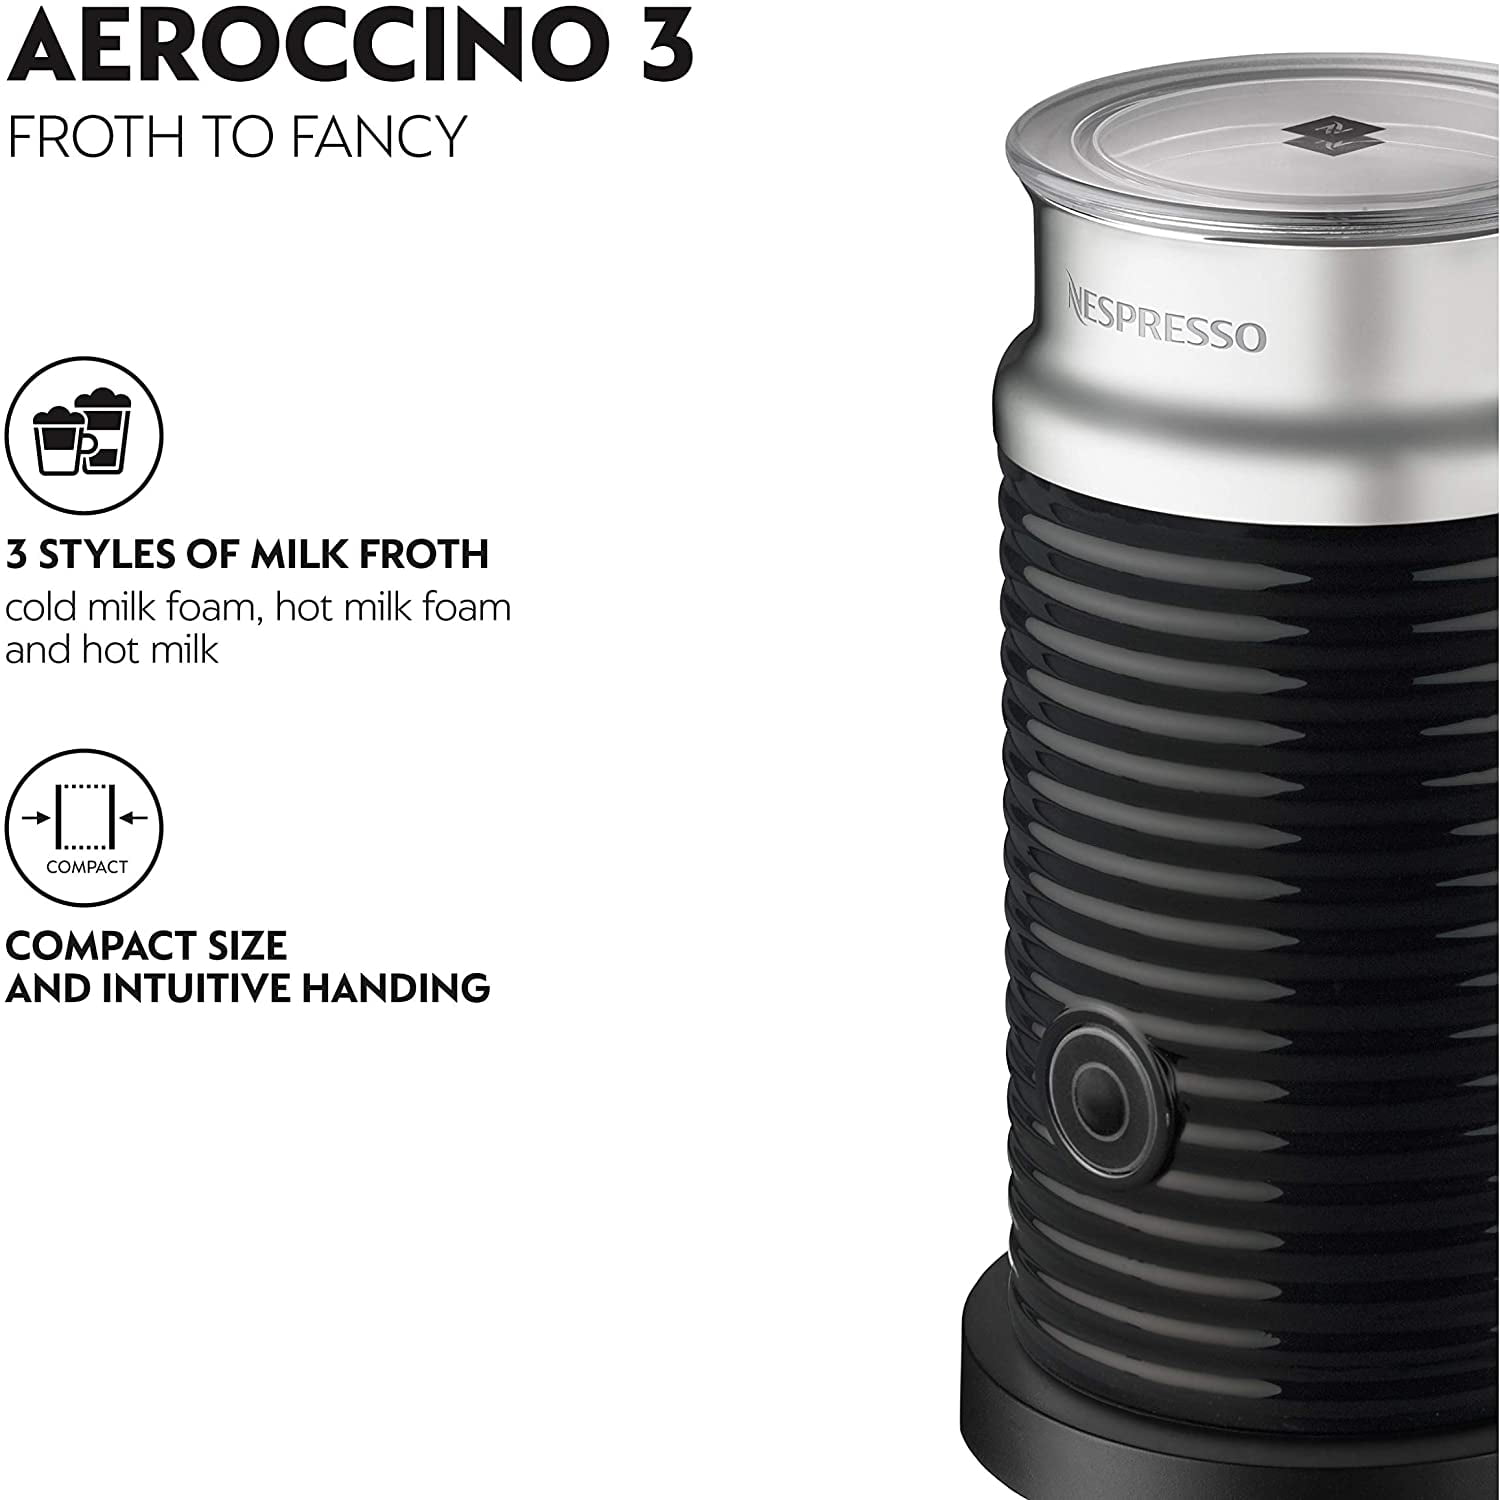 Aeroccino 3 Frother - Walmart.com